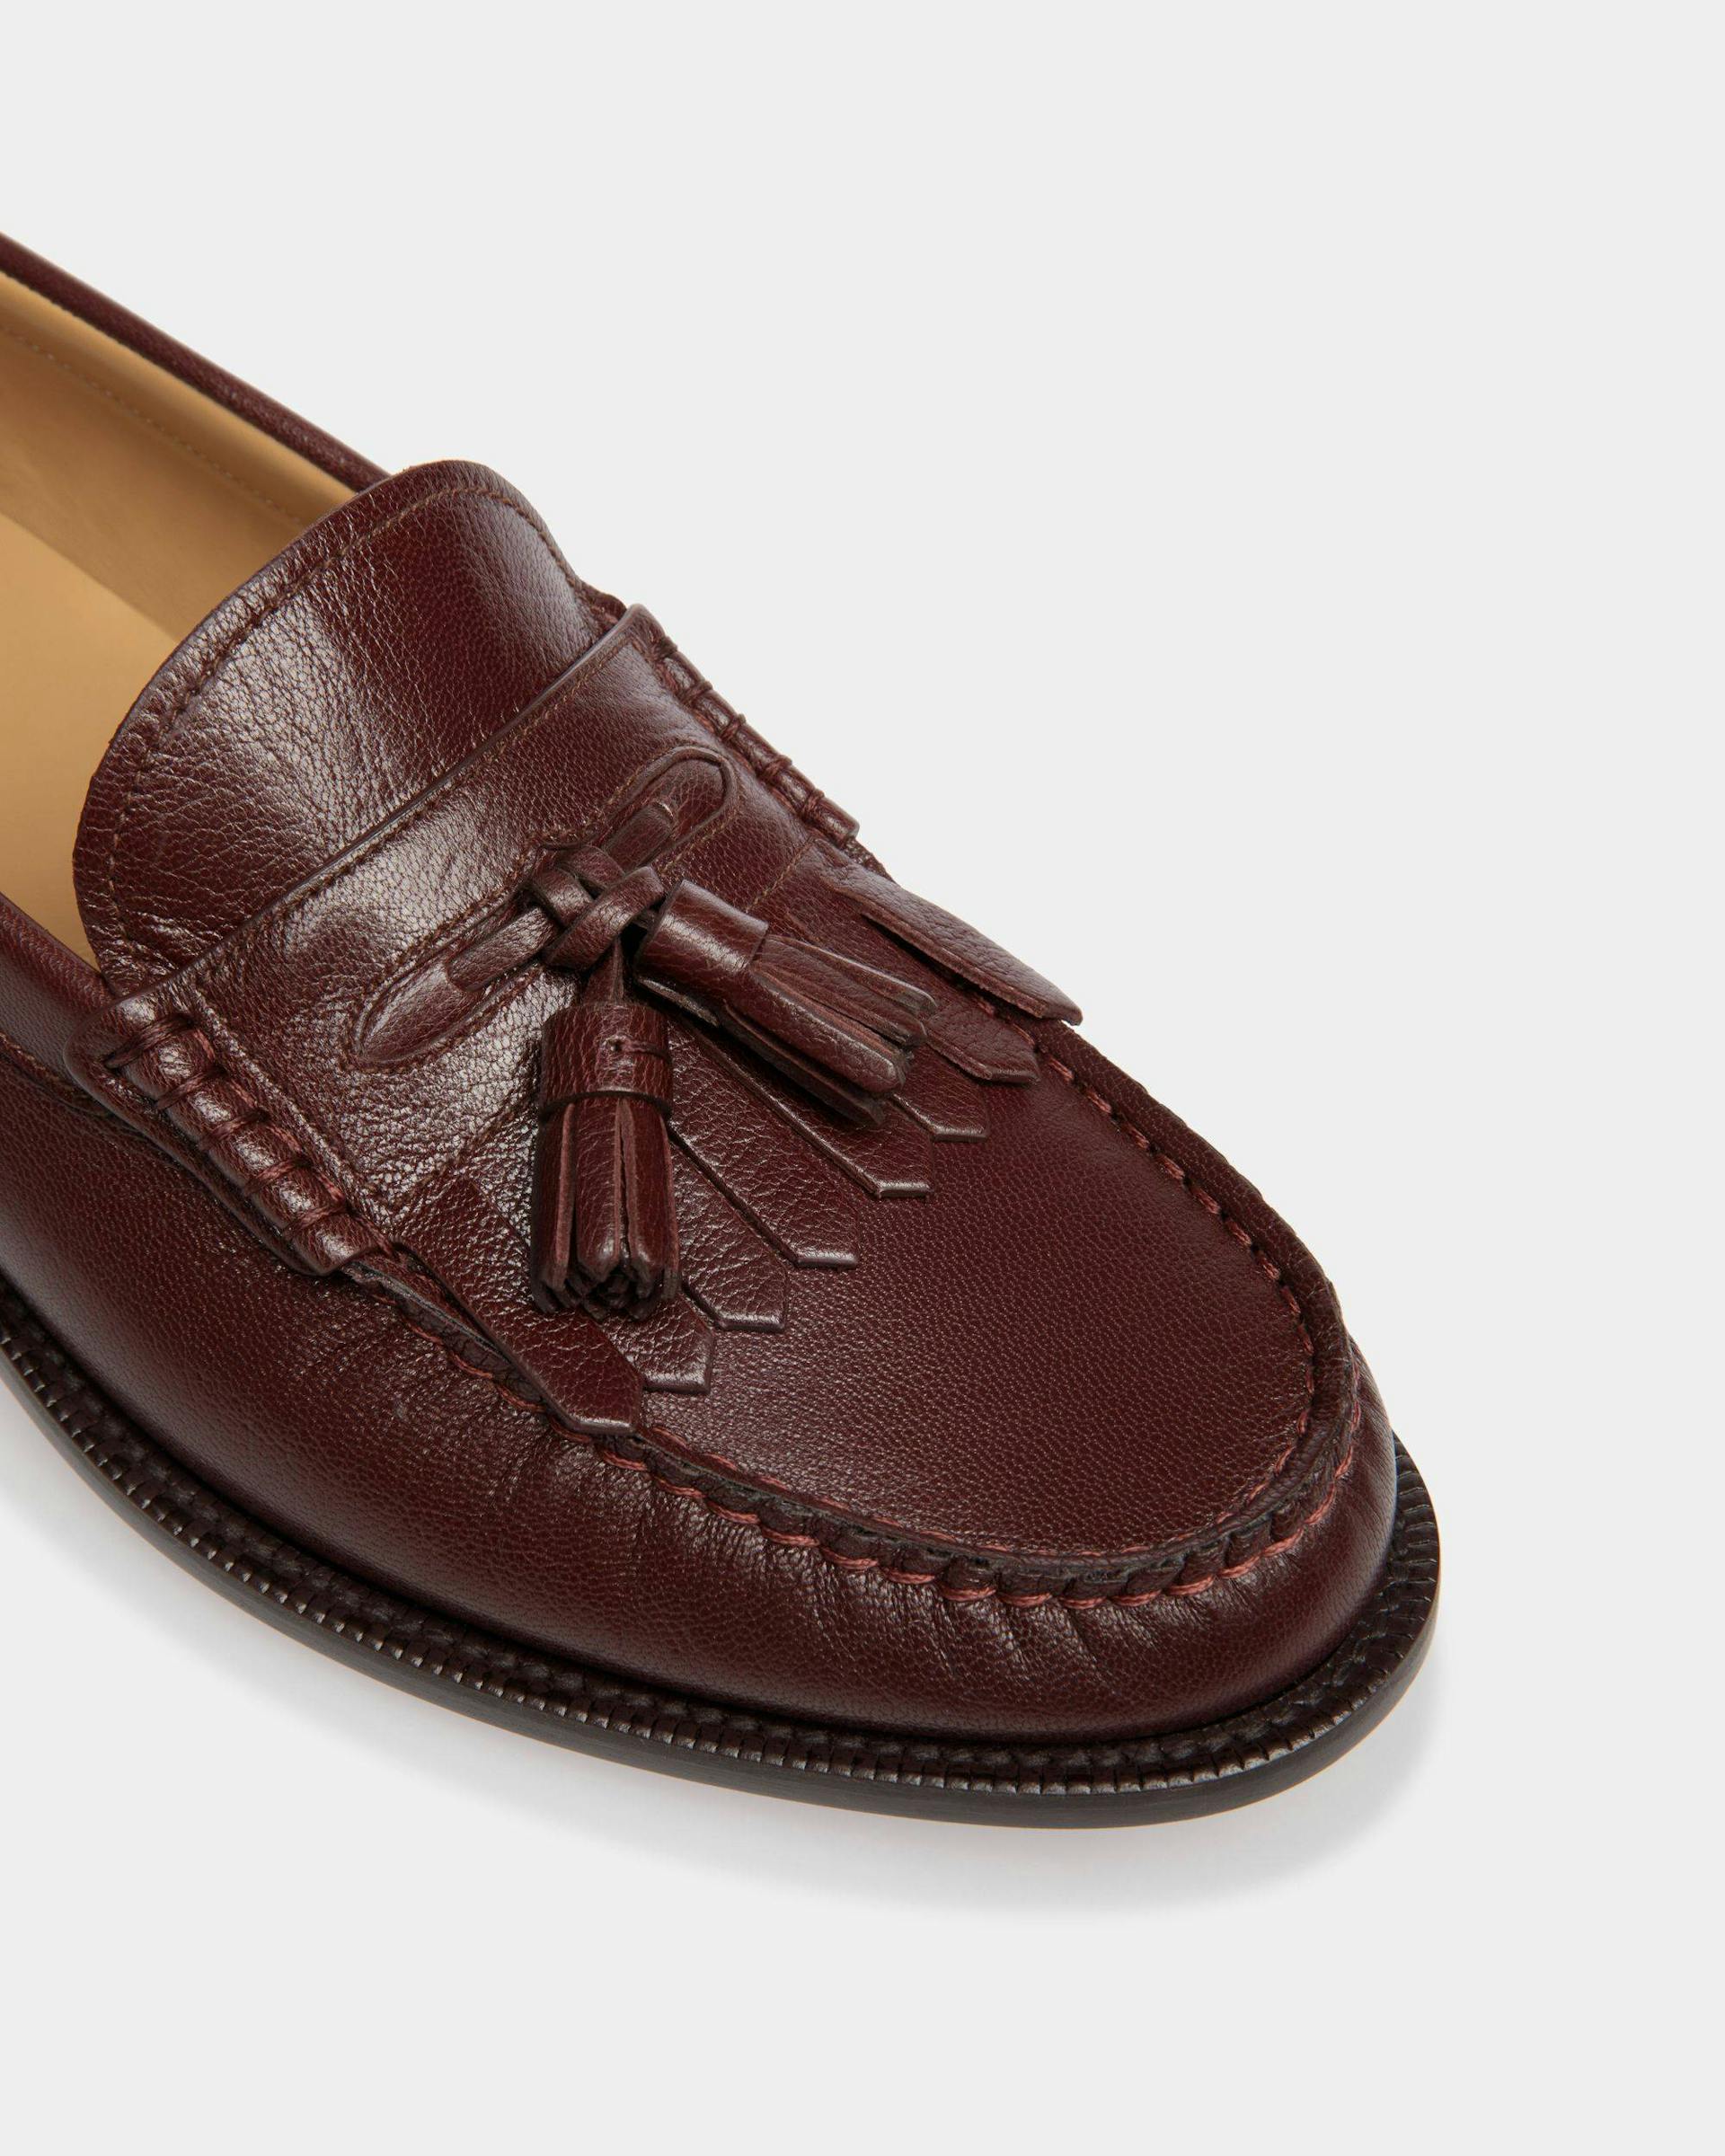 Men's Oregon Loafer in Chestnut Brown Grained Leather | Bally | Still Life Detail